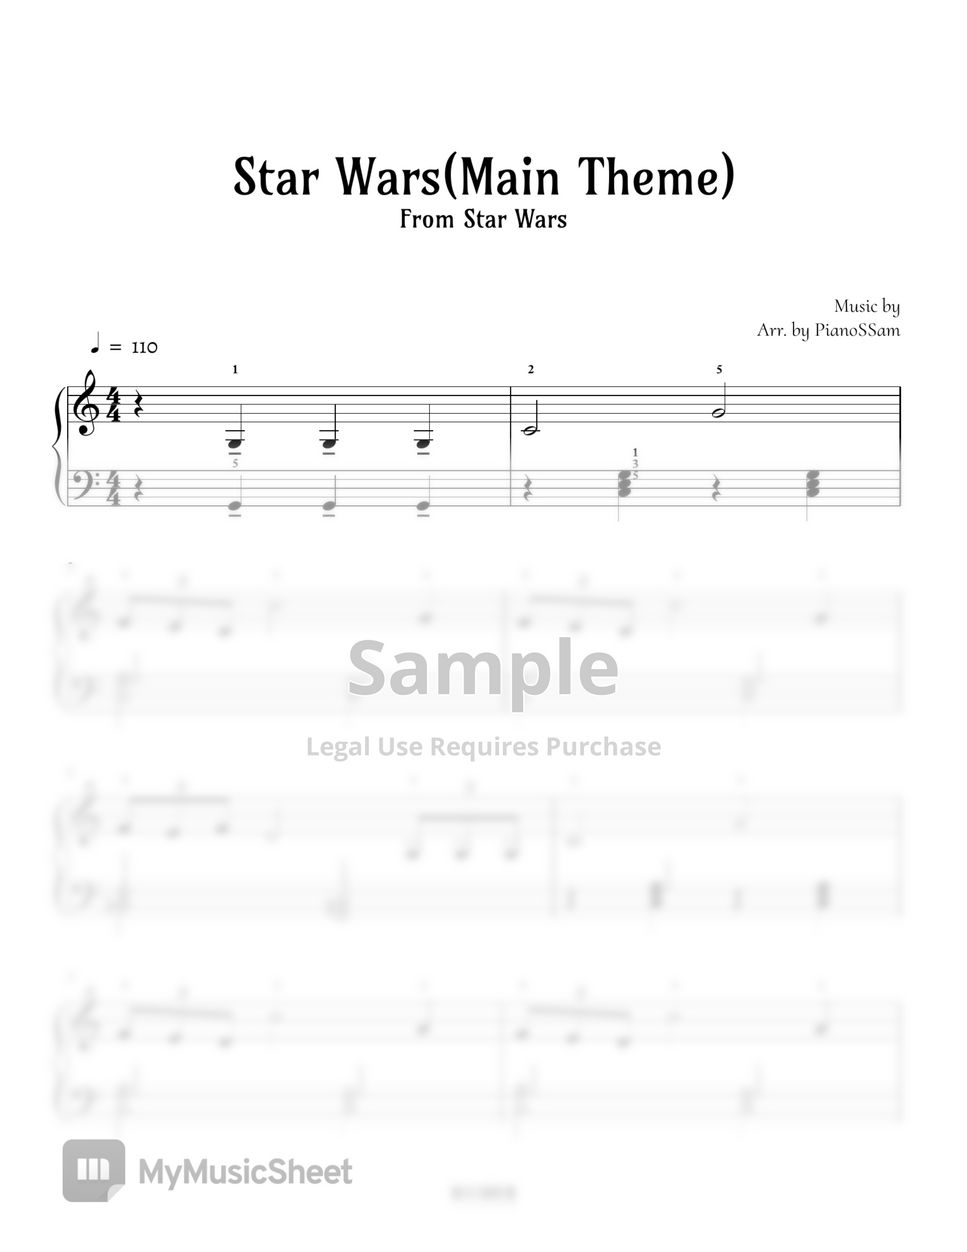 John Williams - [Easy] Star Wars Main Theme (Star Wars) by PianoSSam